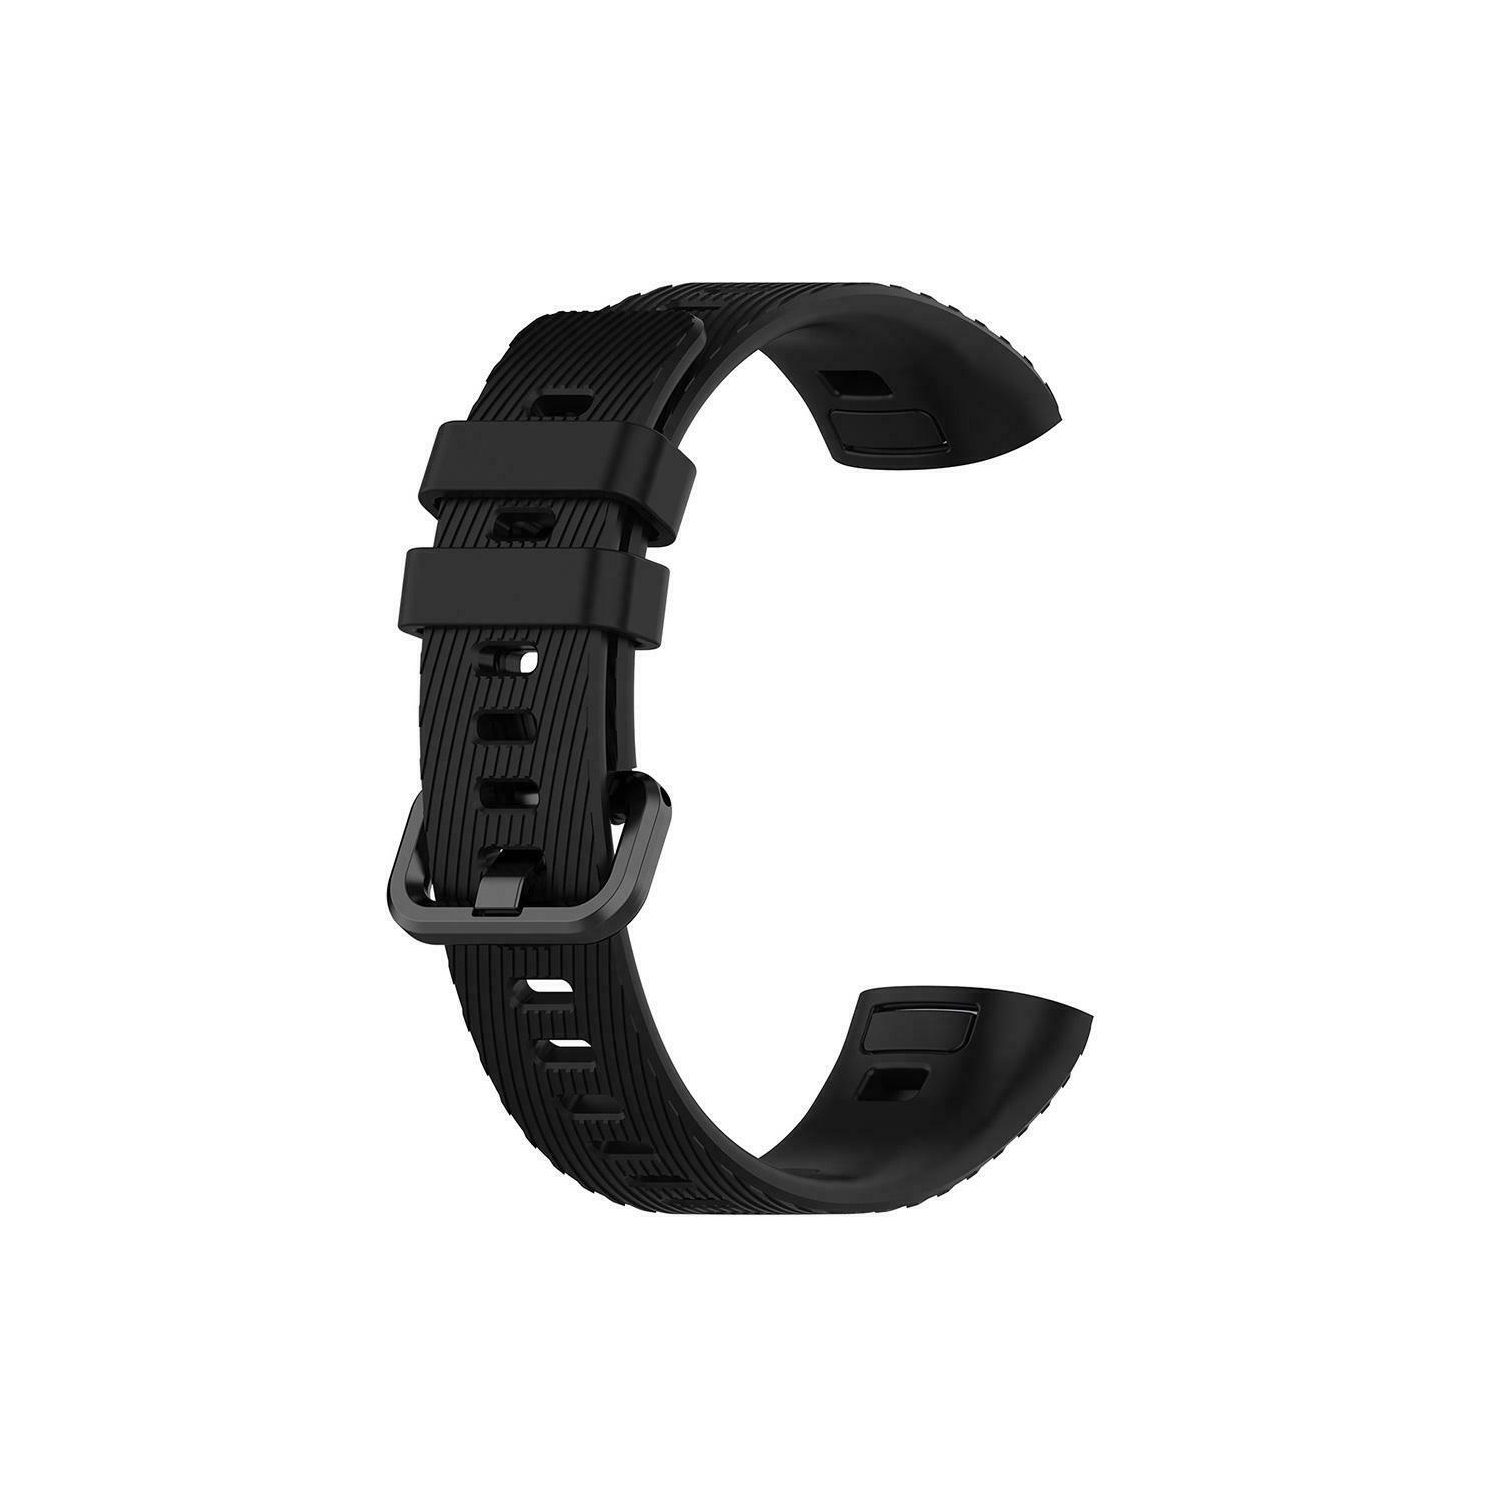 Soft TPU Watch Band Bracelet Wrist Strap for Huawei Band 3 Pro (Black)